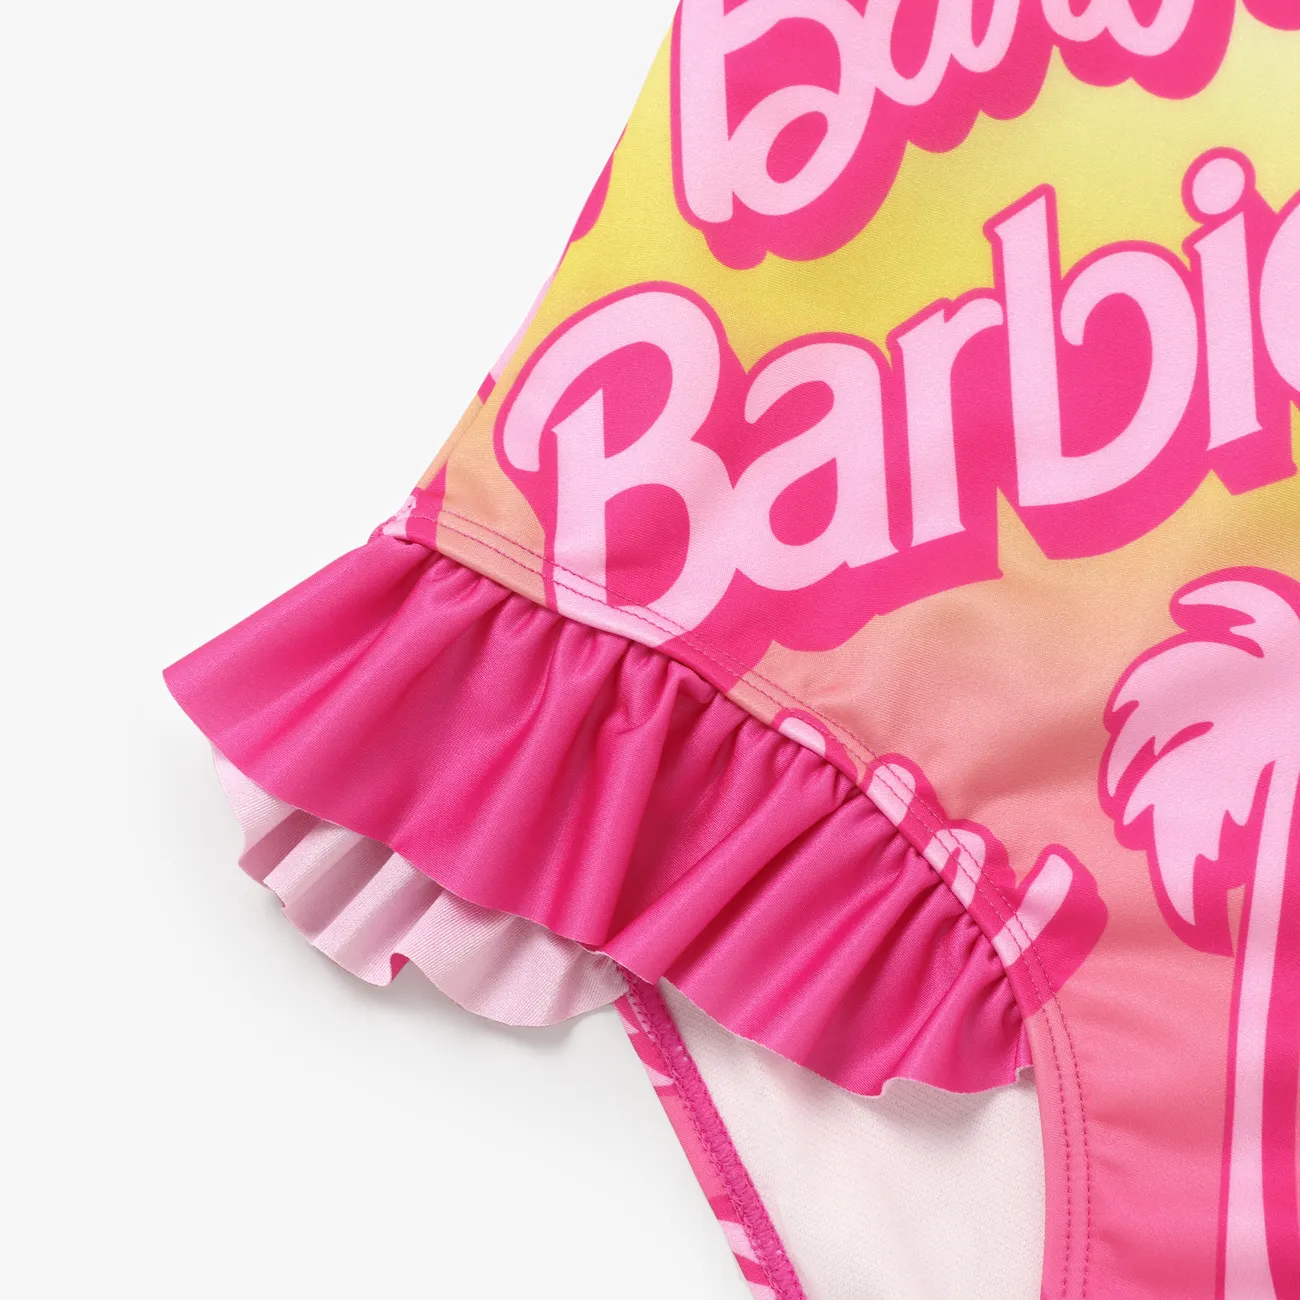 Barbie ملابس السباحة ماما وأنا حريمي حافة كشكشة حروف عيد الأم زاهى الألوان big image 1